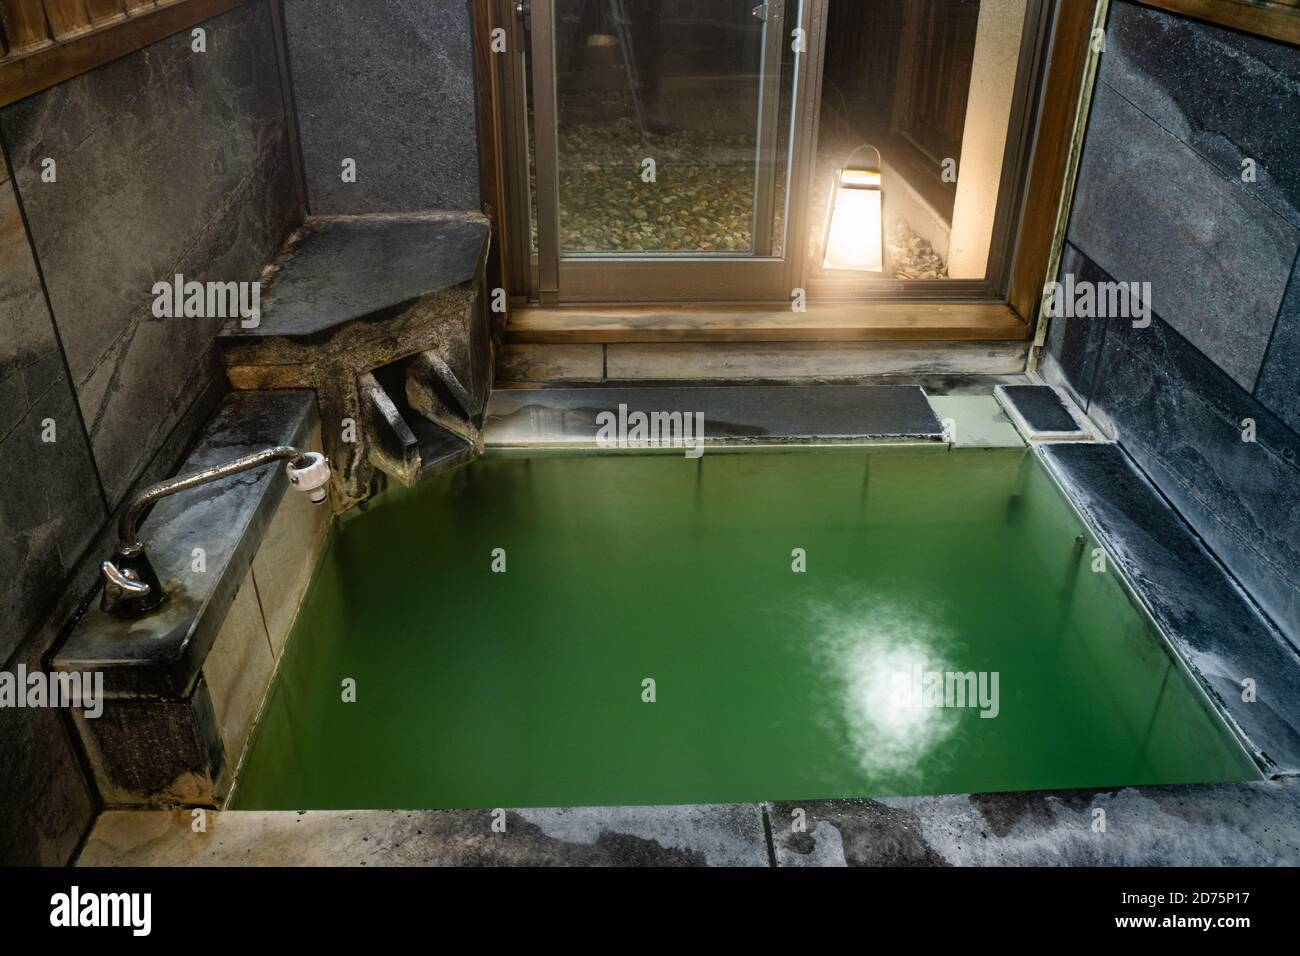 Japanese hot springs bath tub indoors. Stock Photo